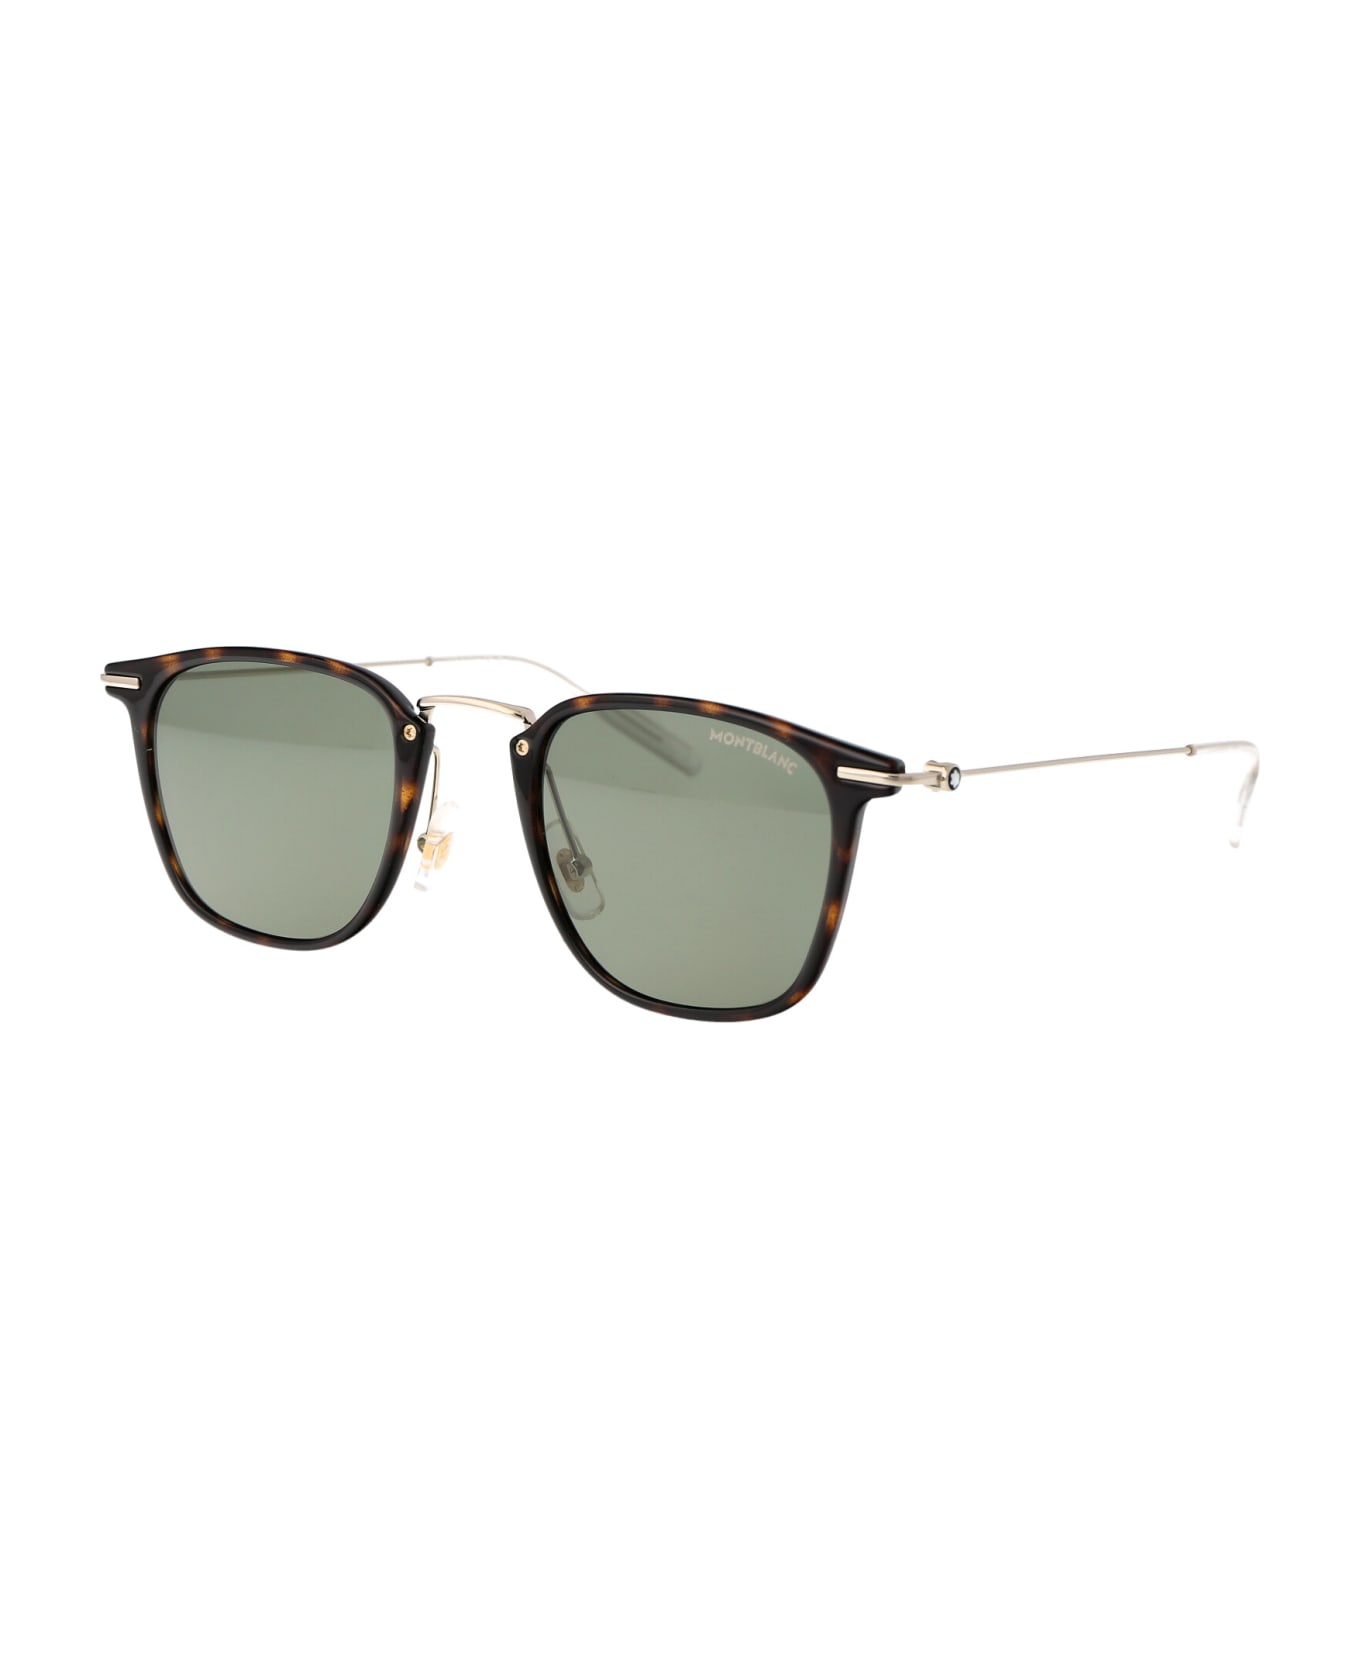 Montblanc Mb0295s Sunglasses - 002 HAVANA GOLD GREEN